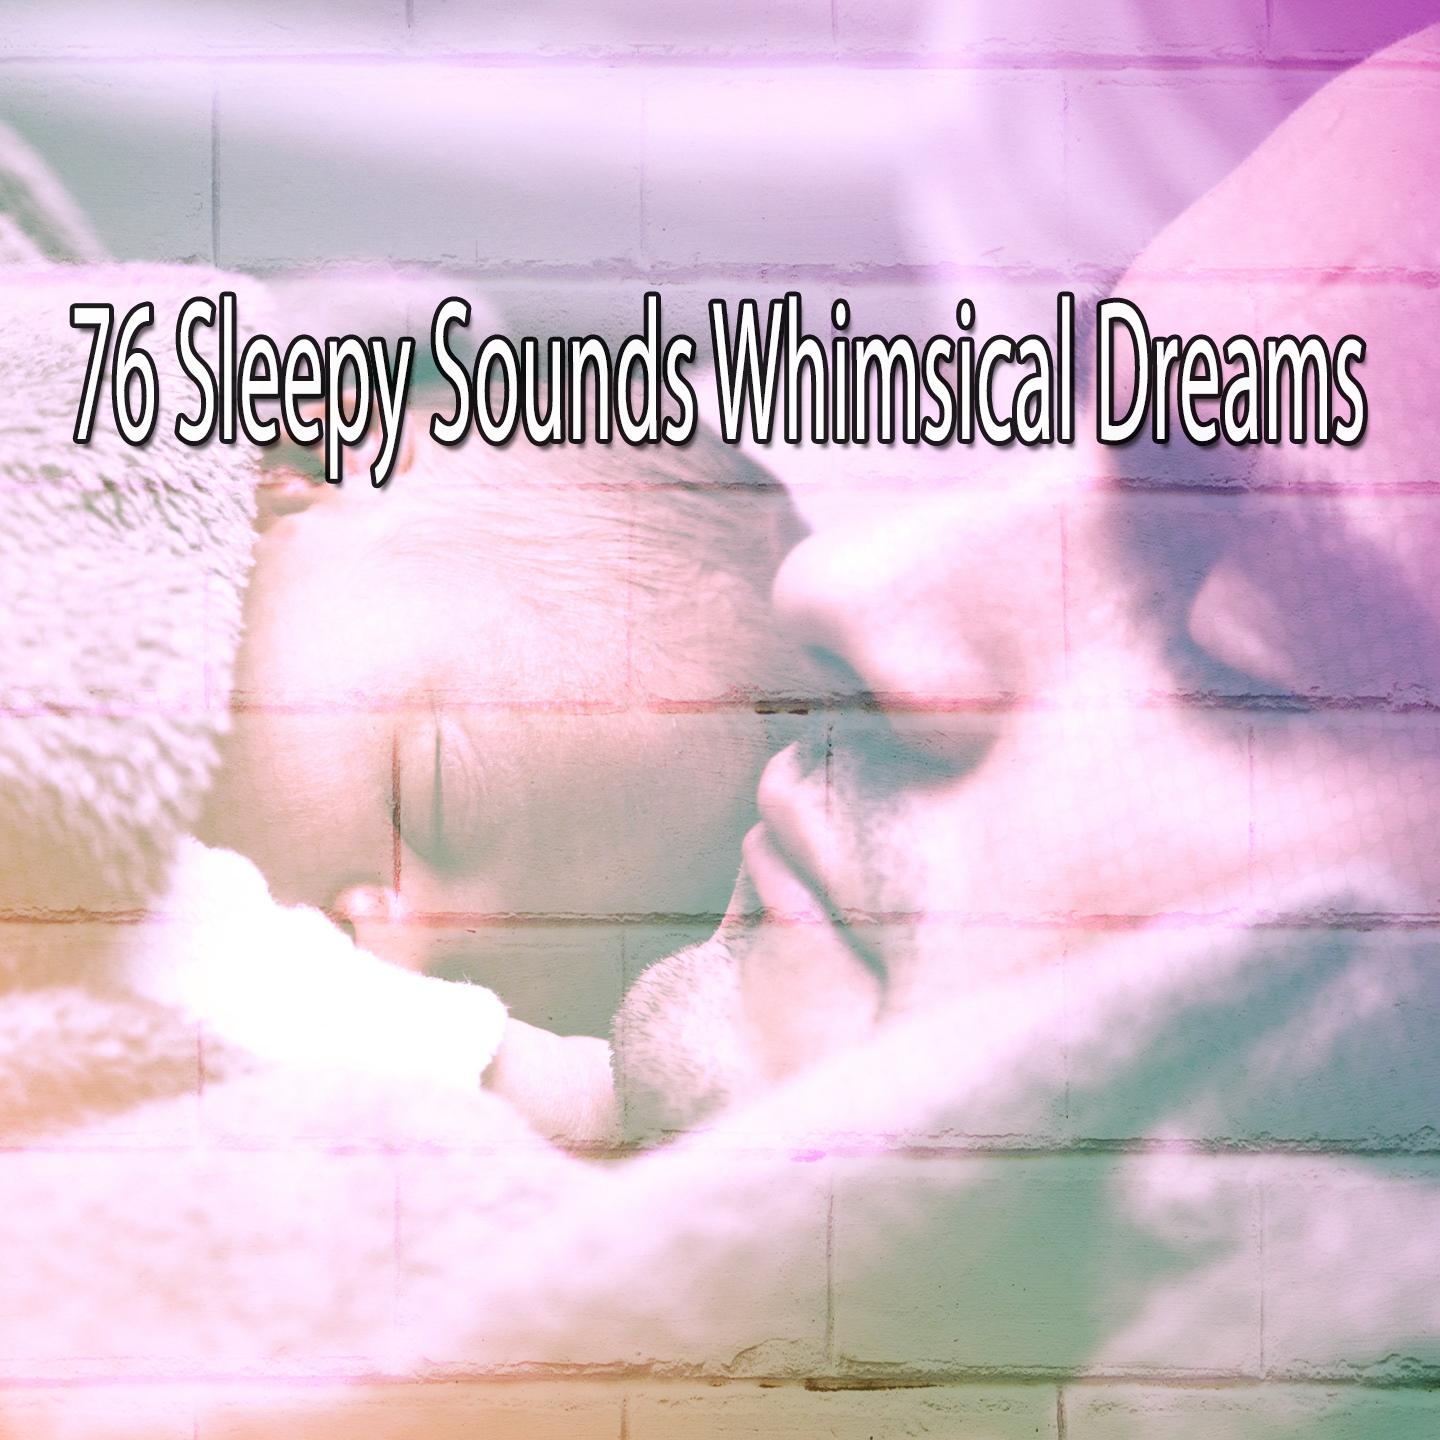 76 Sleepy Sounds Whimsical Dreams